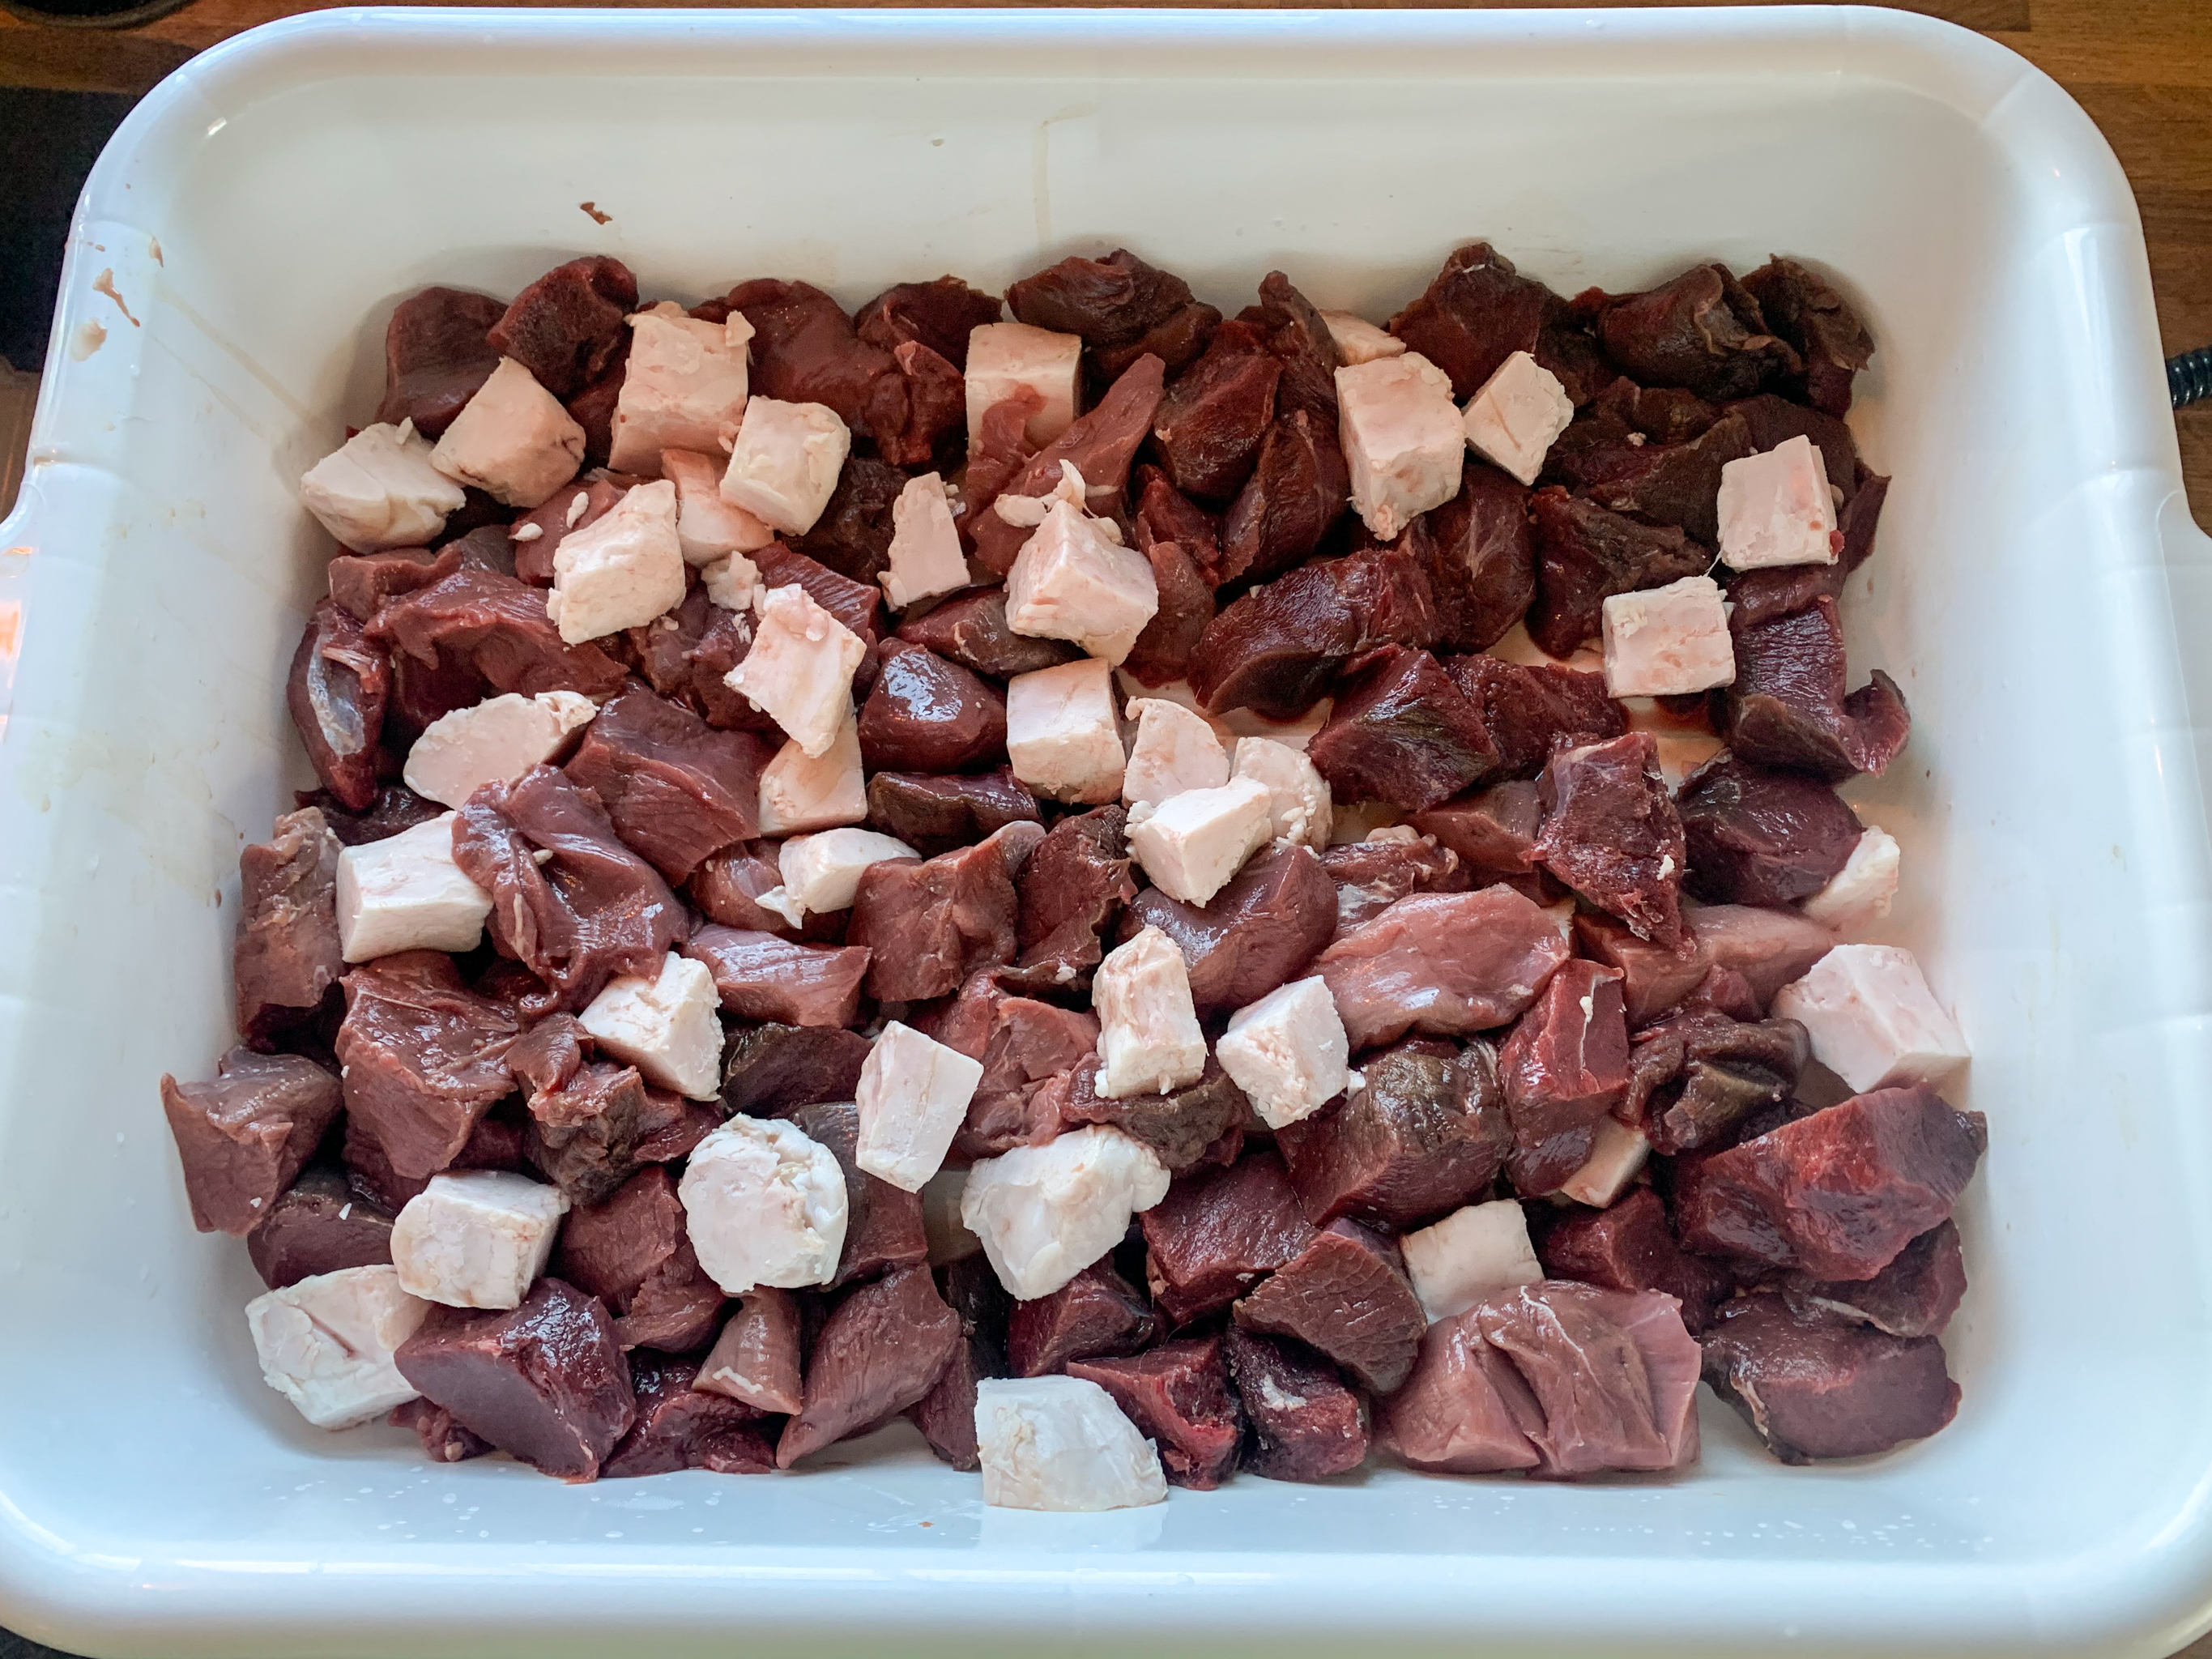 Cubed venison and pork fat